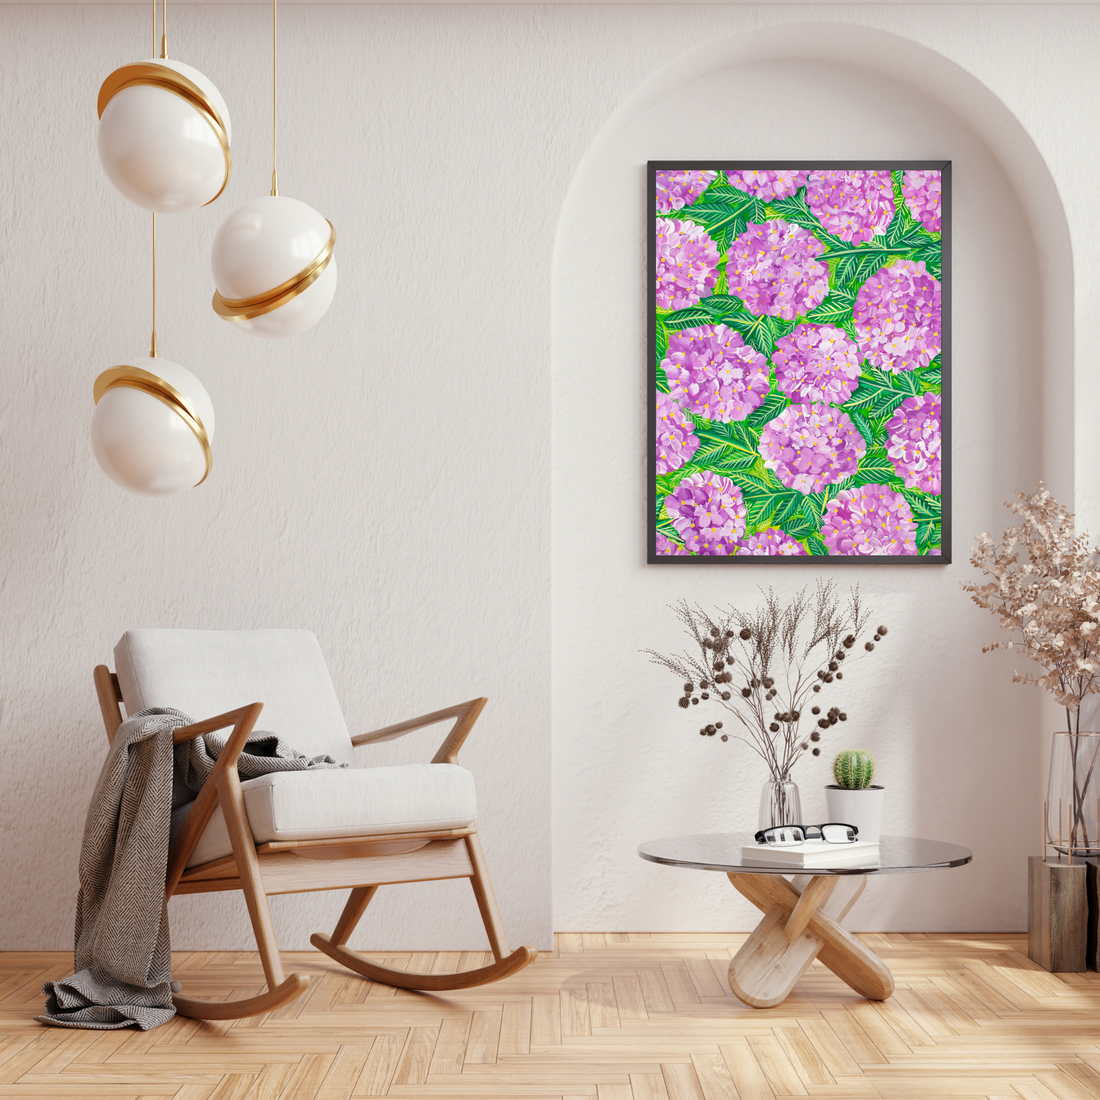 Purple Hydrangea art print